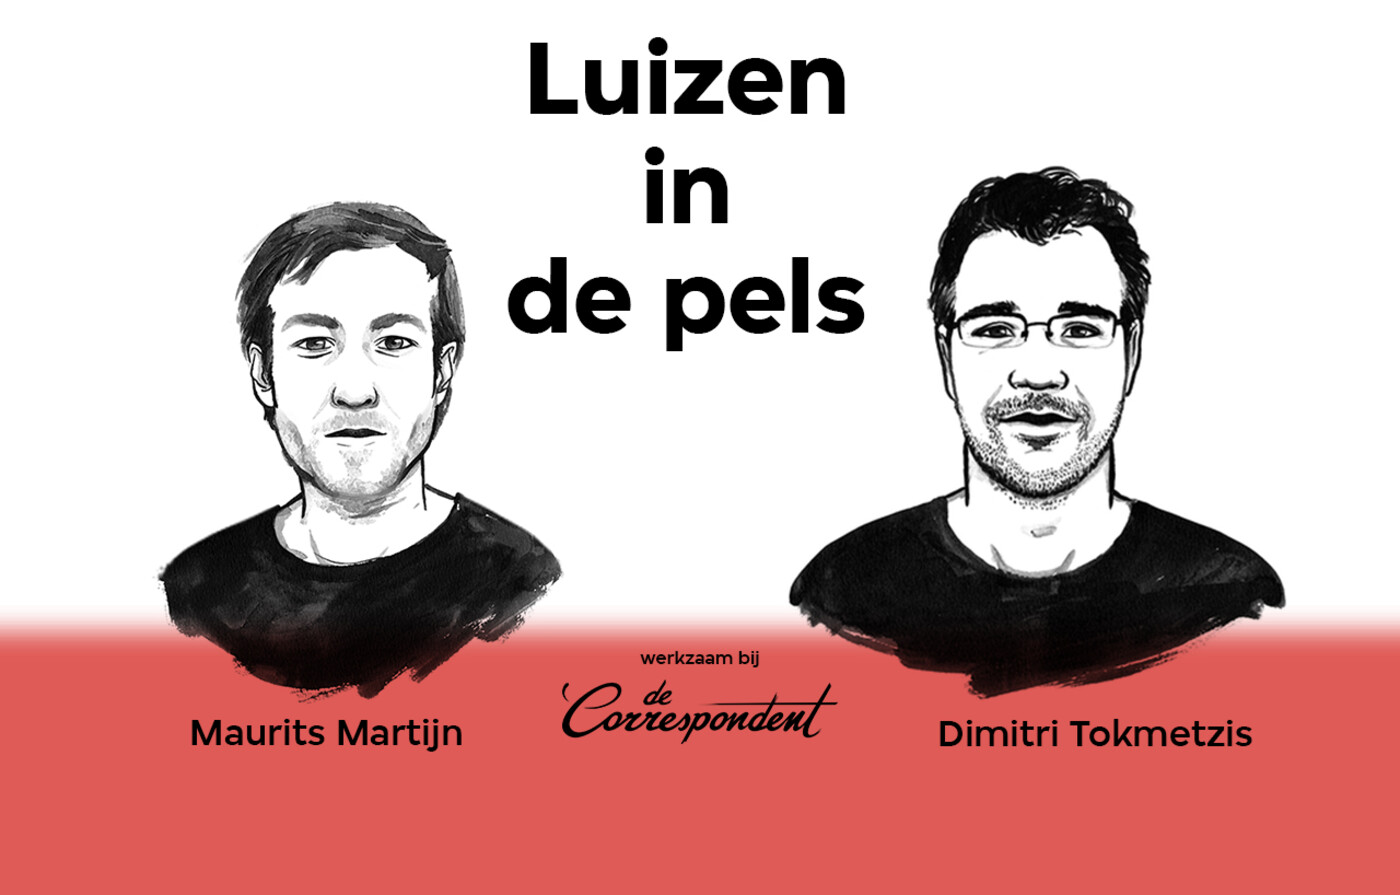 Luizen in de pels: Maurits Martijn en Dimitri Tokmetzis.